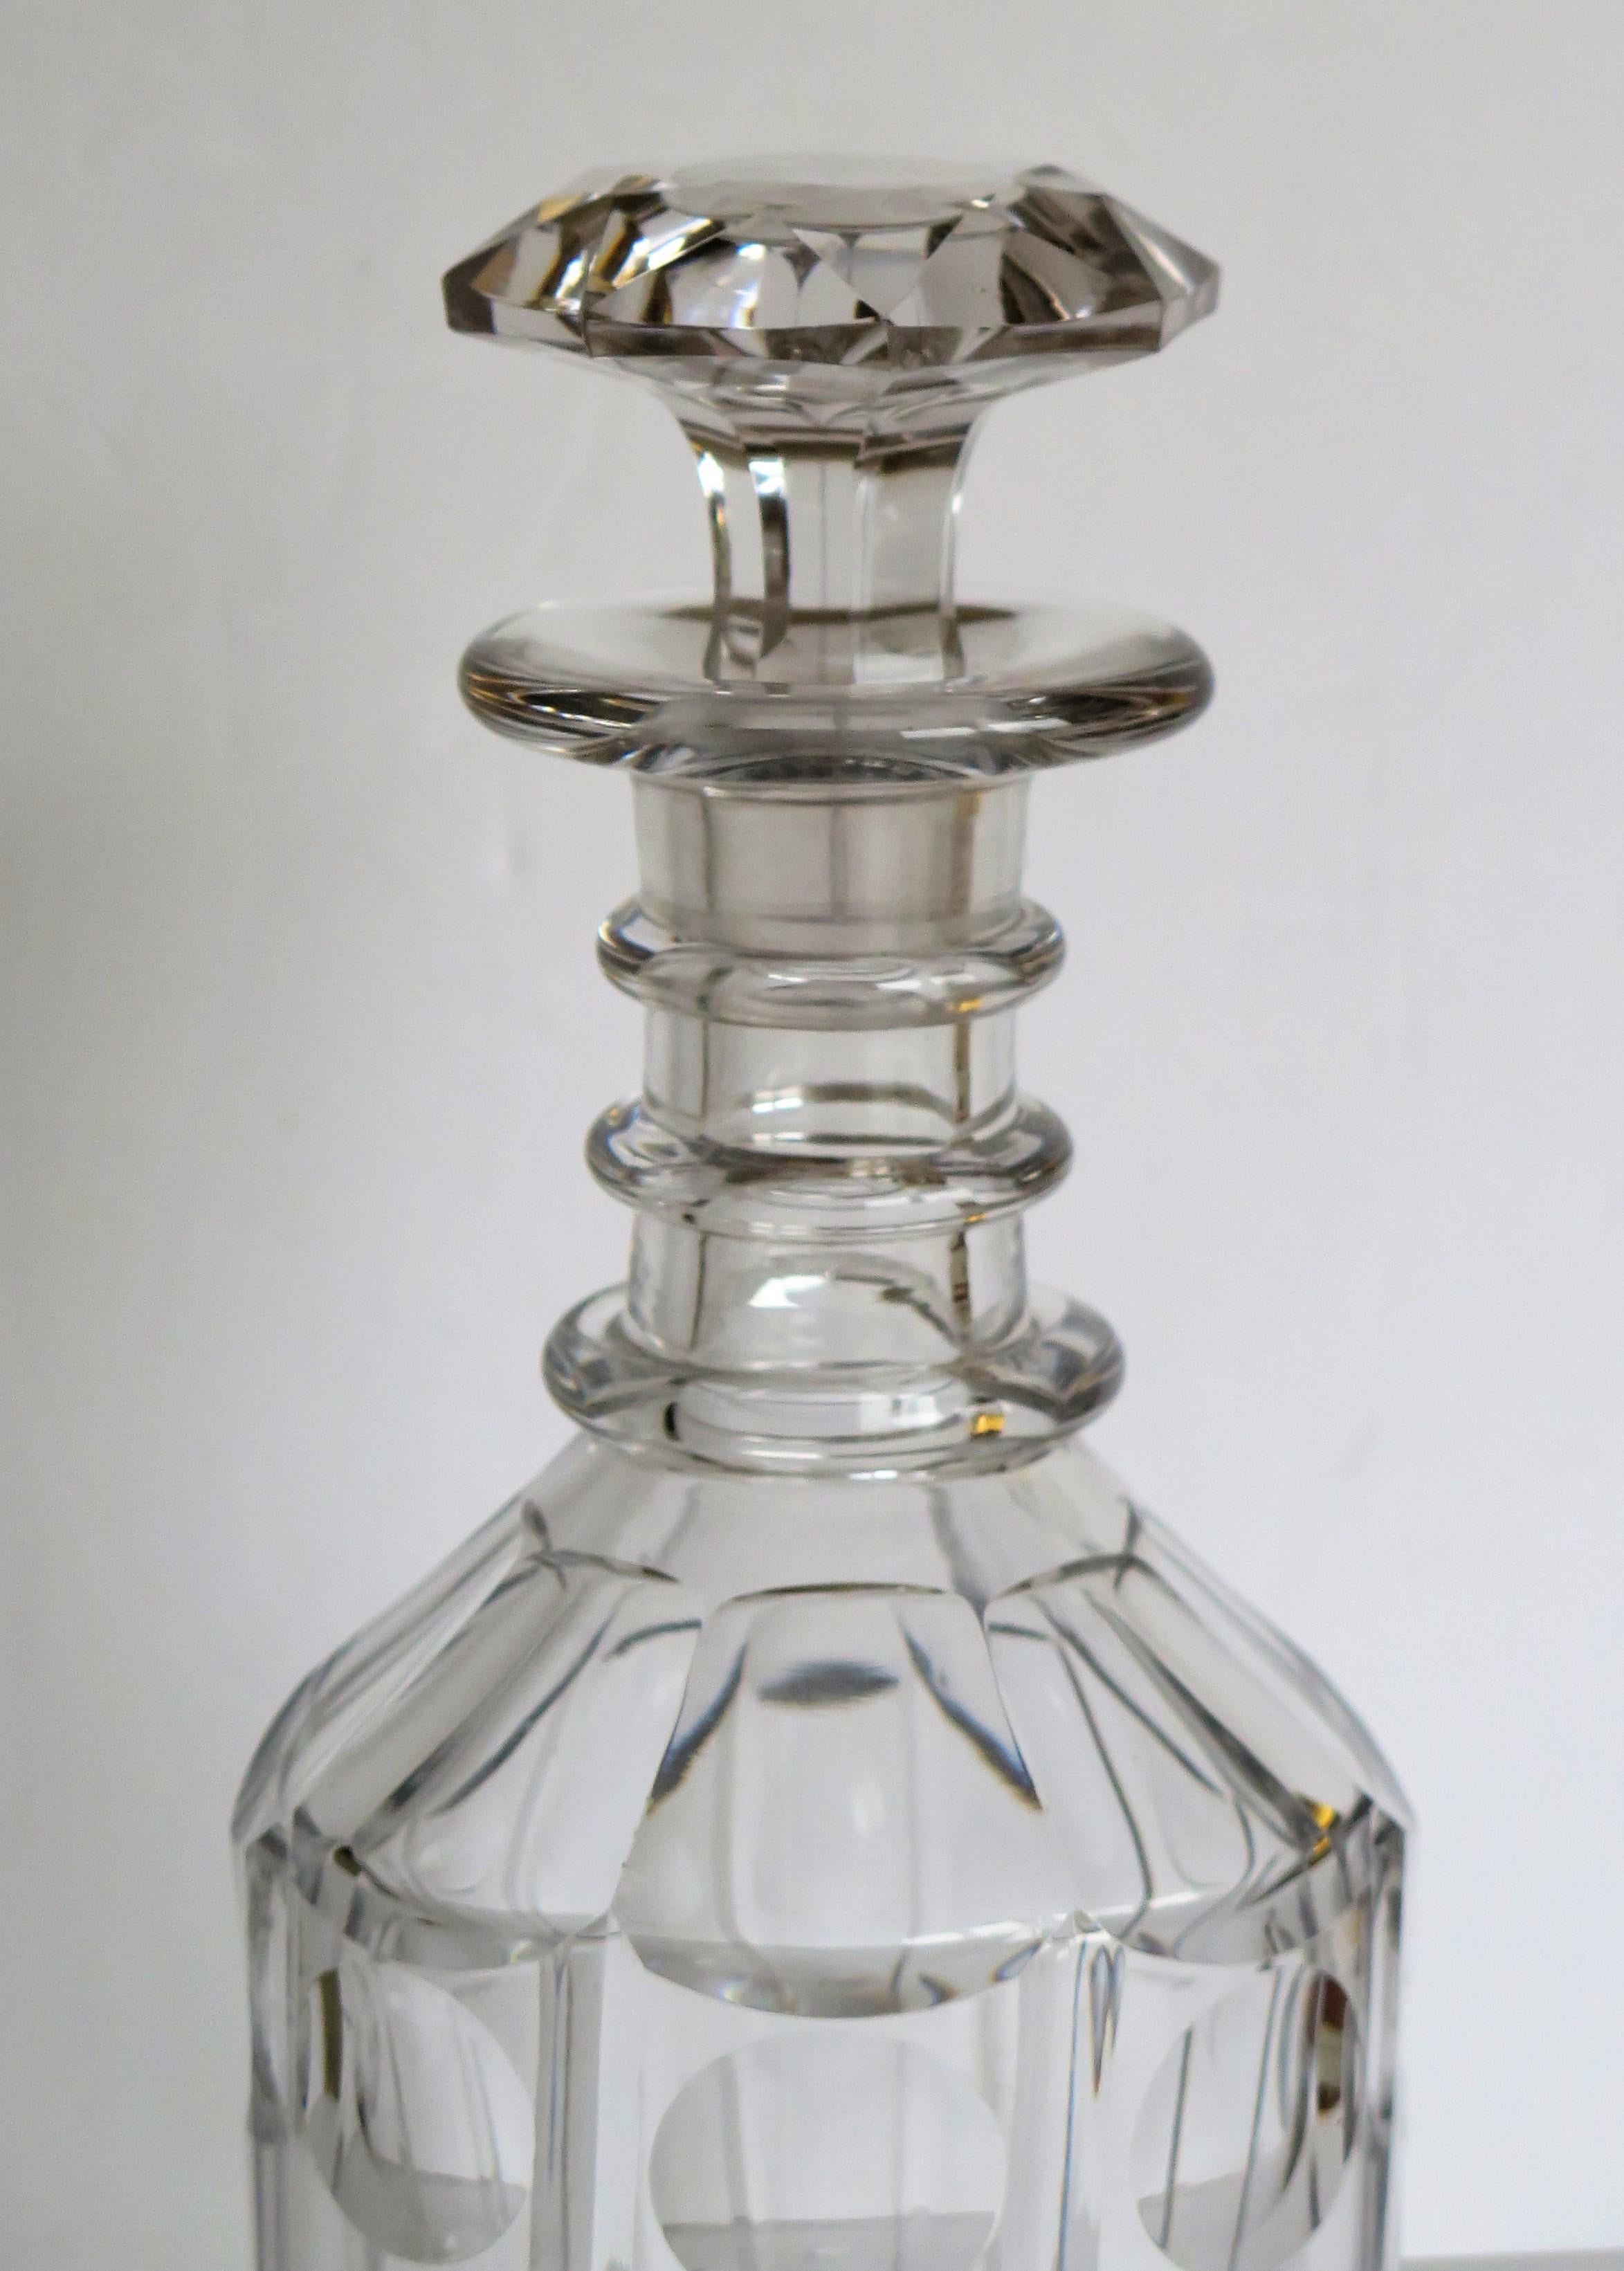 19th Century Georgian Lead Glass Decanter 3 Neck Rings and Mushroom Stopper, circa 1820